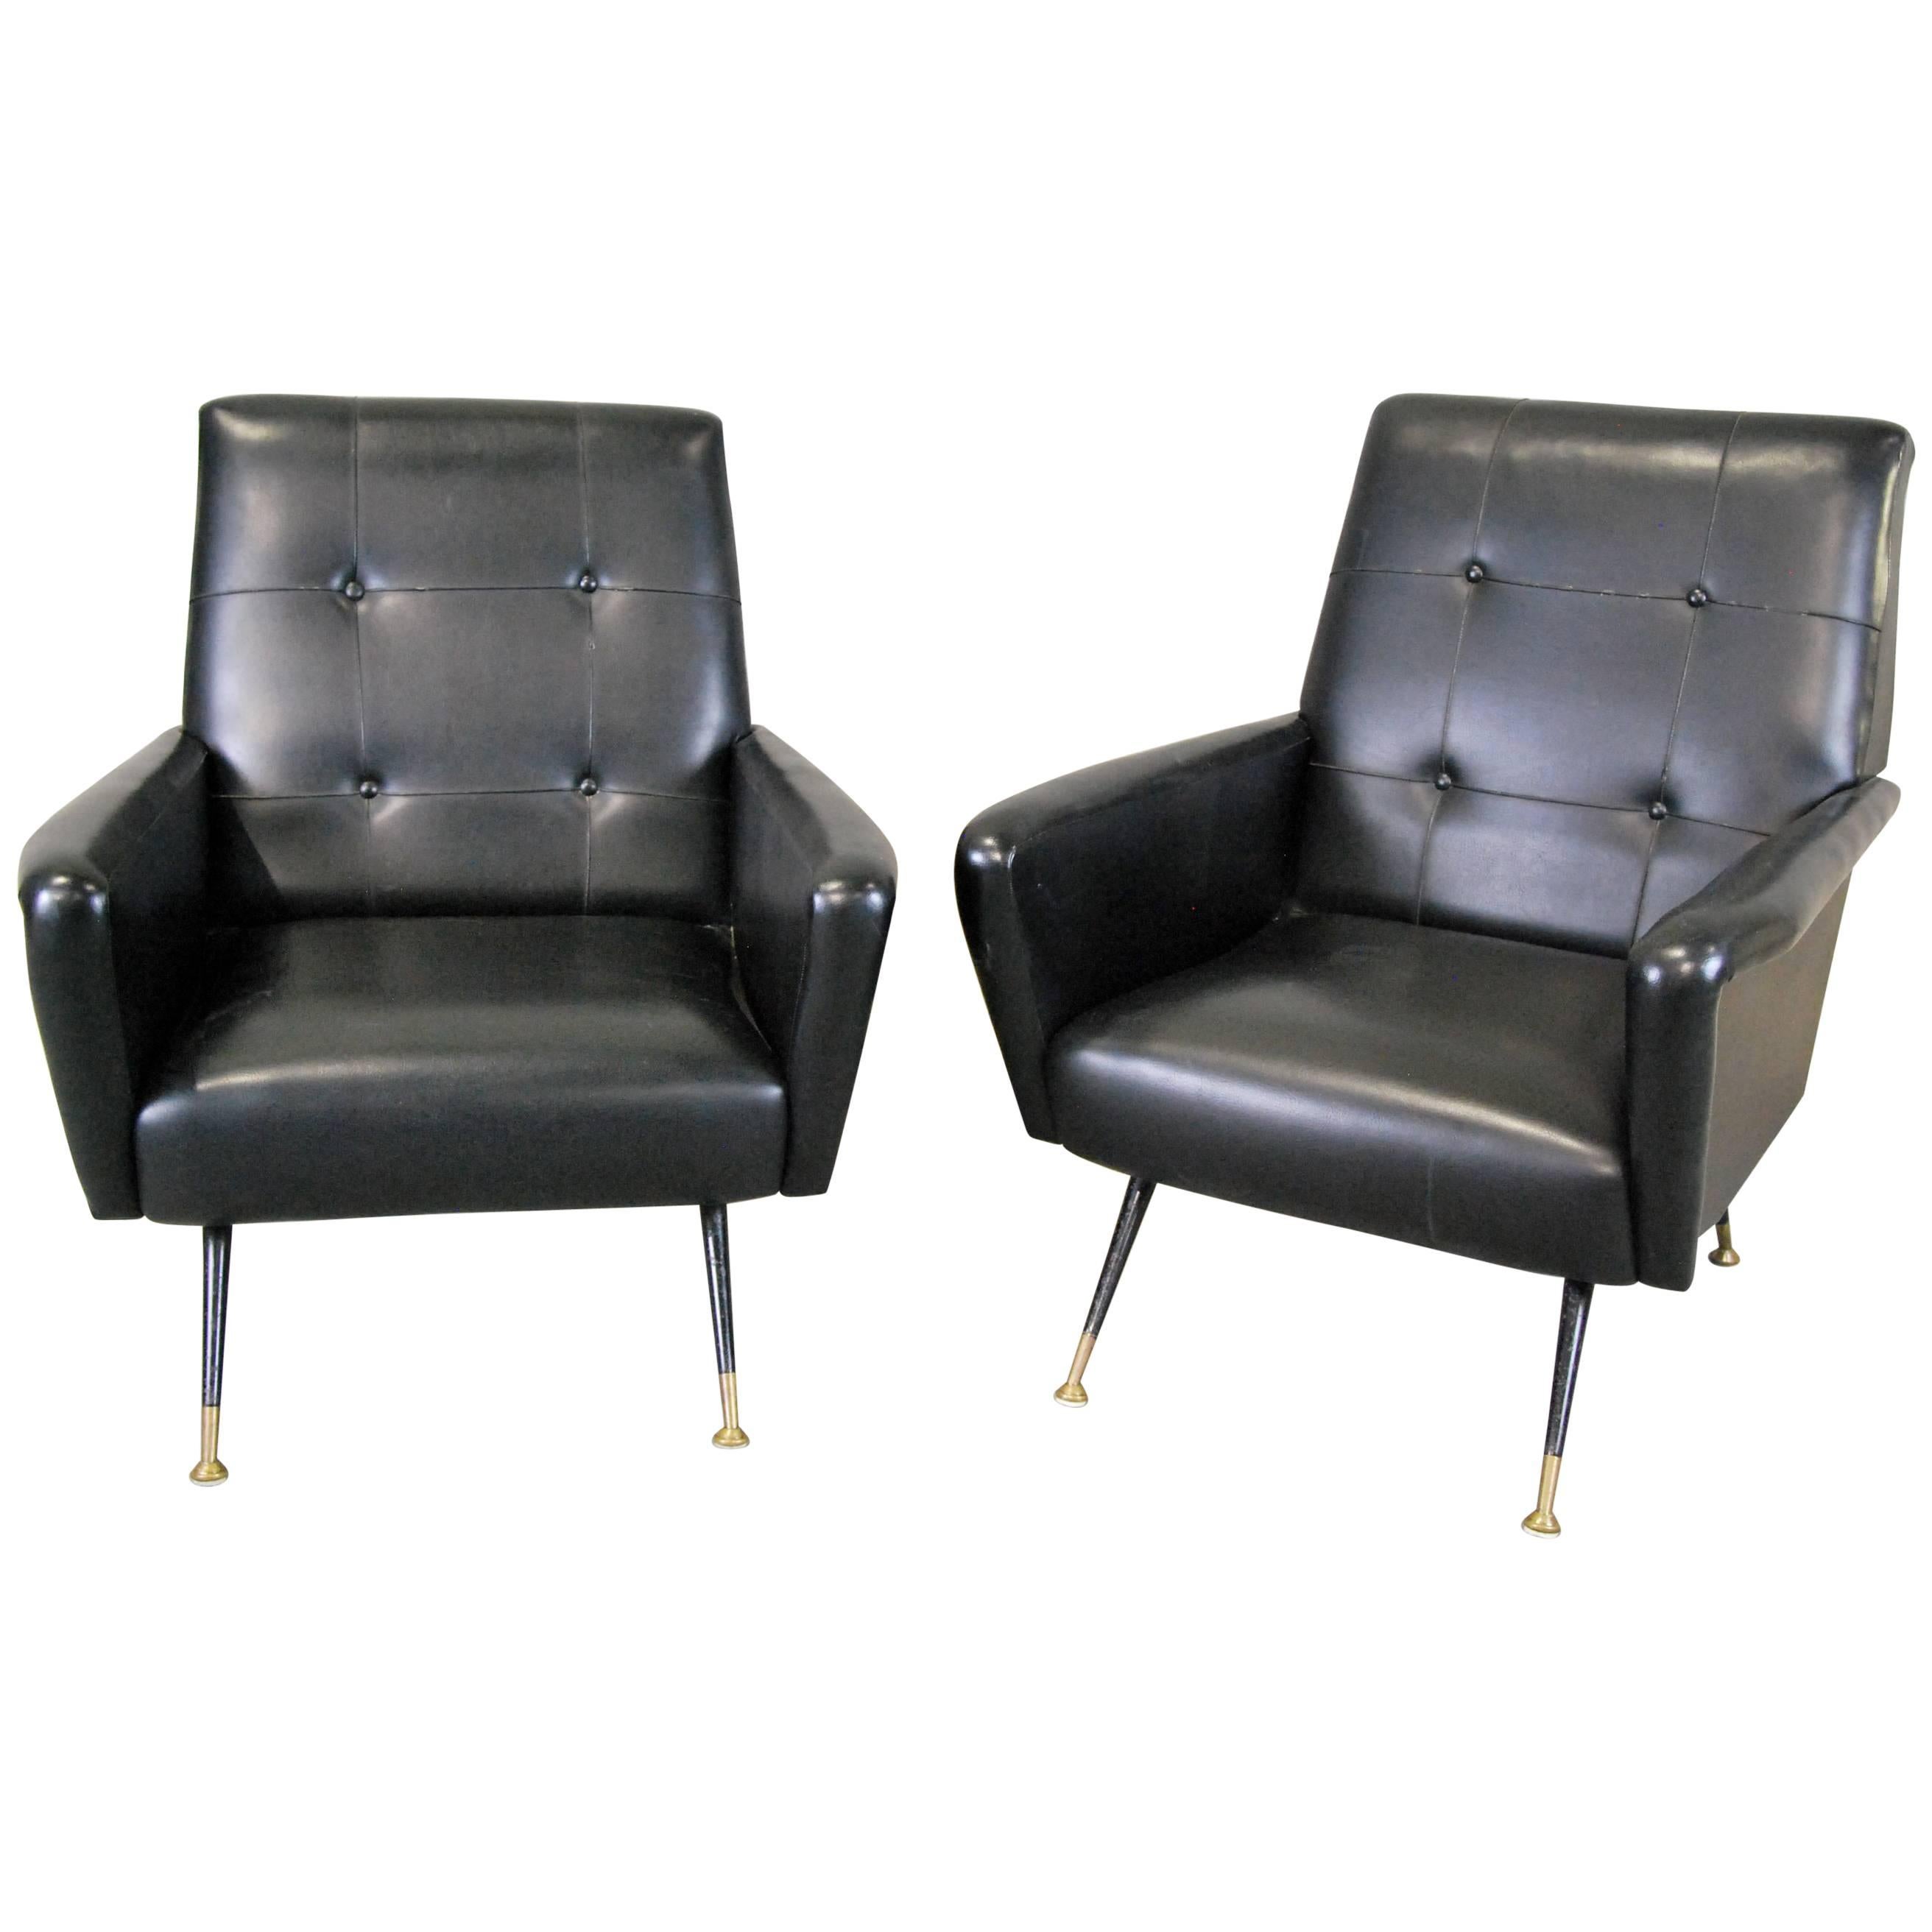 1960 Italian Gio Ponti Inspired Lounge Chairs